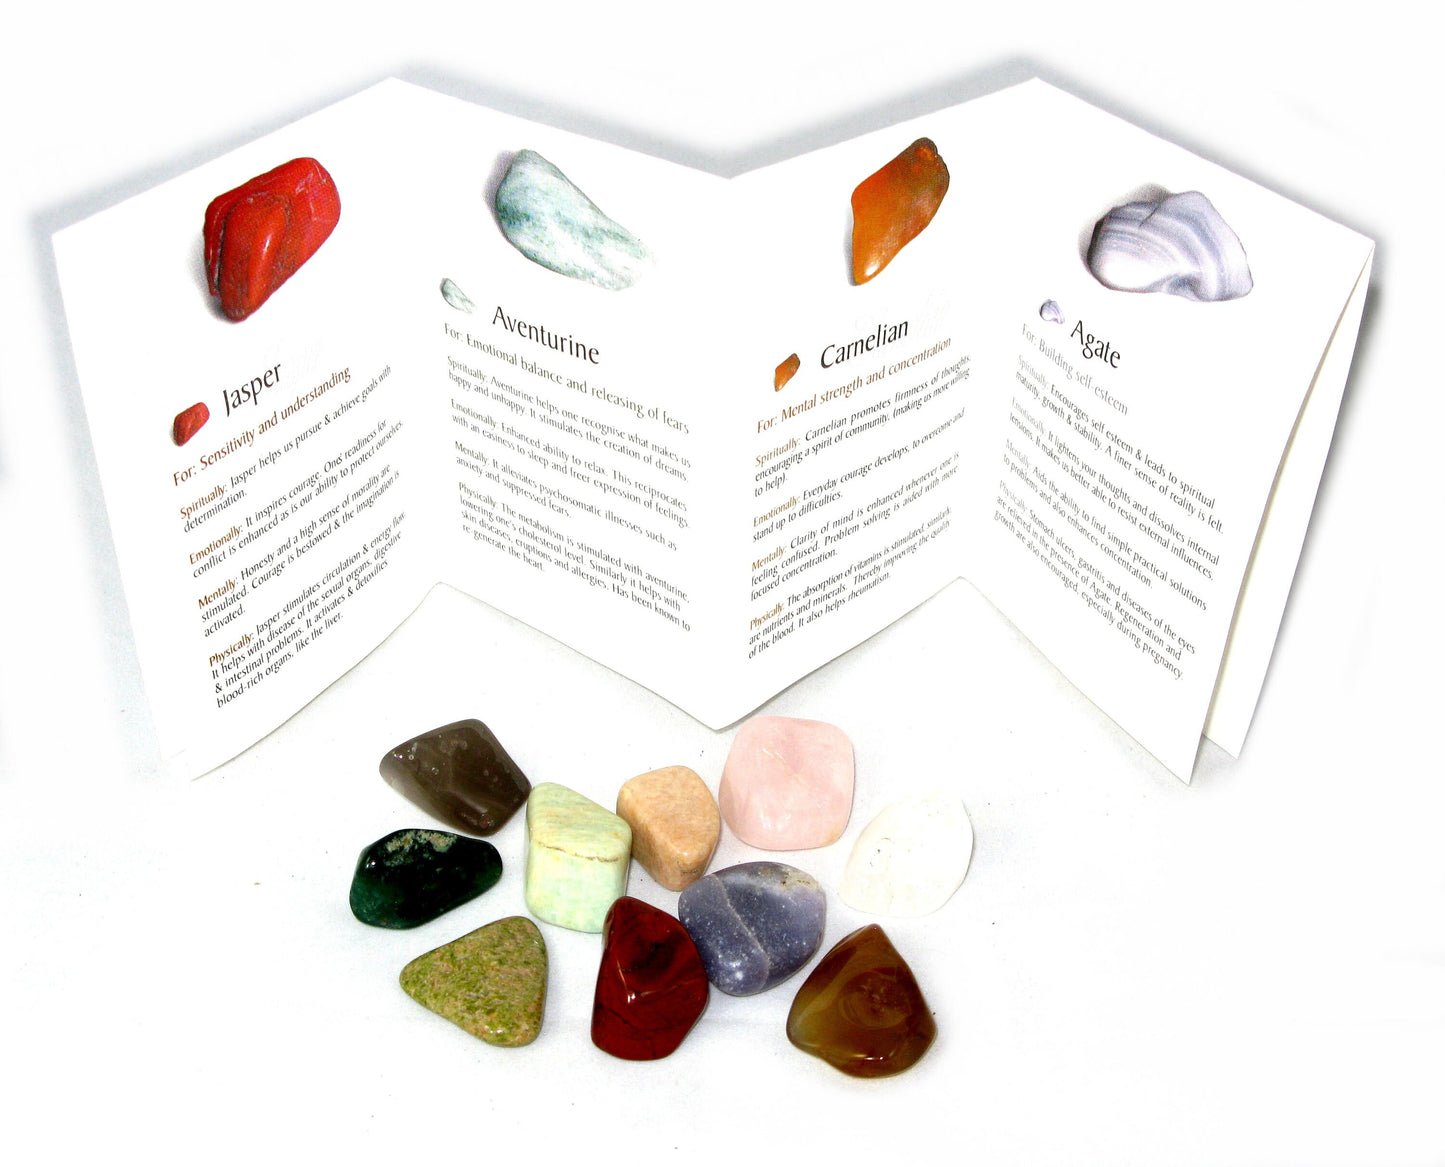 Touchstones of Africa African Healing Gemstones Spriritual Alignment 10 Healing Stones Guide Box Jasper + Aventurine + Carnelian + 7 more!